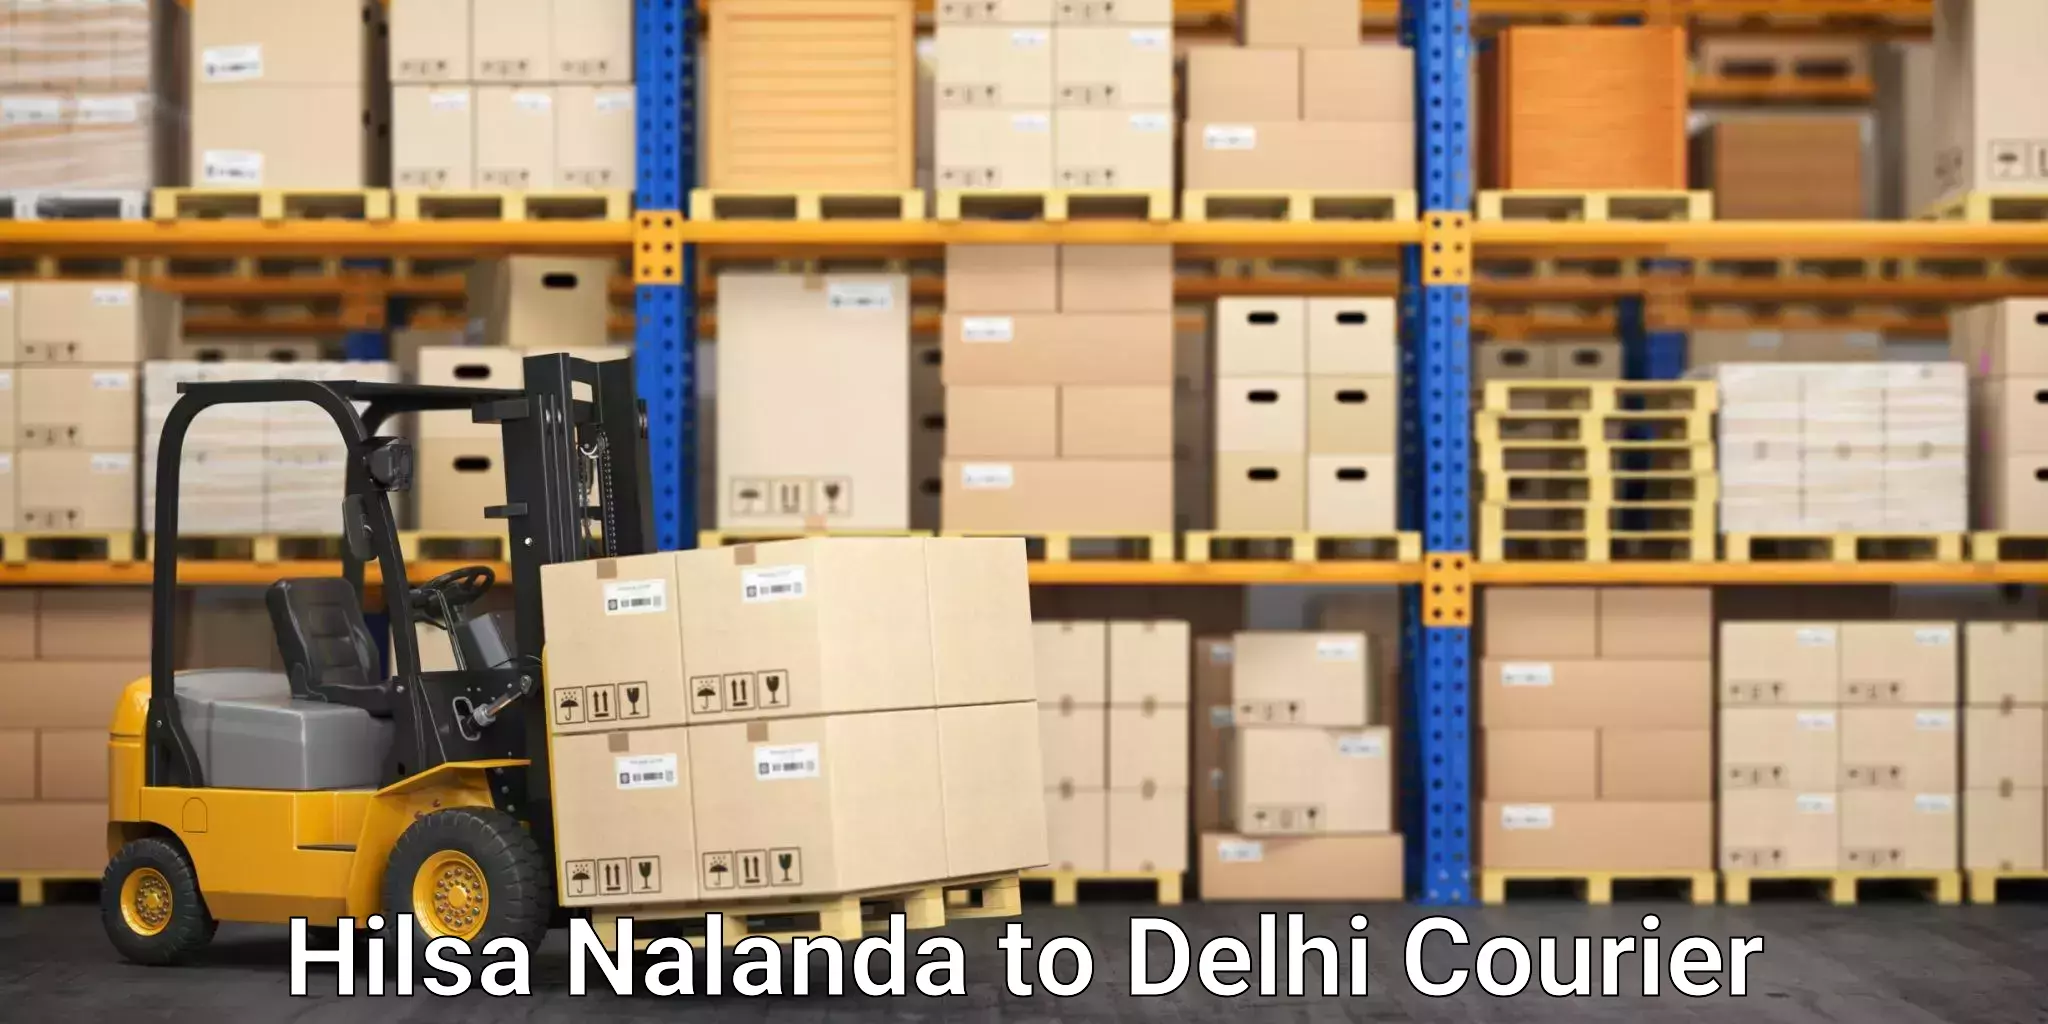 Stress-free household moving Hilsa Nalanda to Delhi